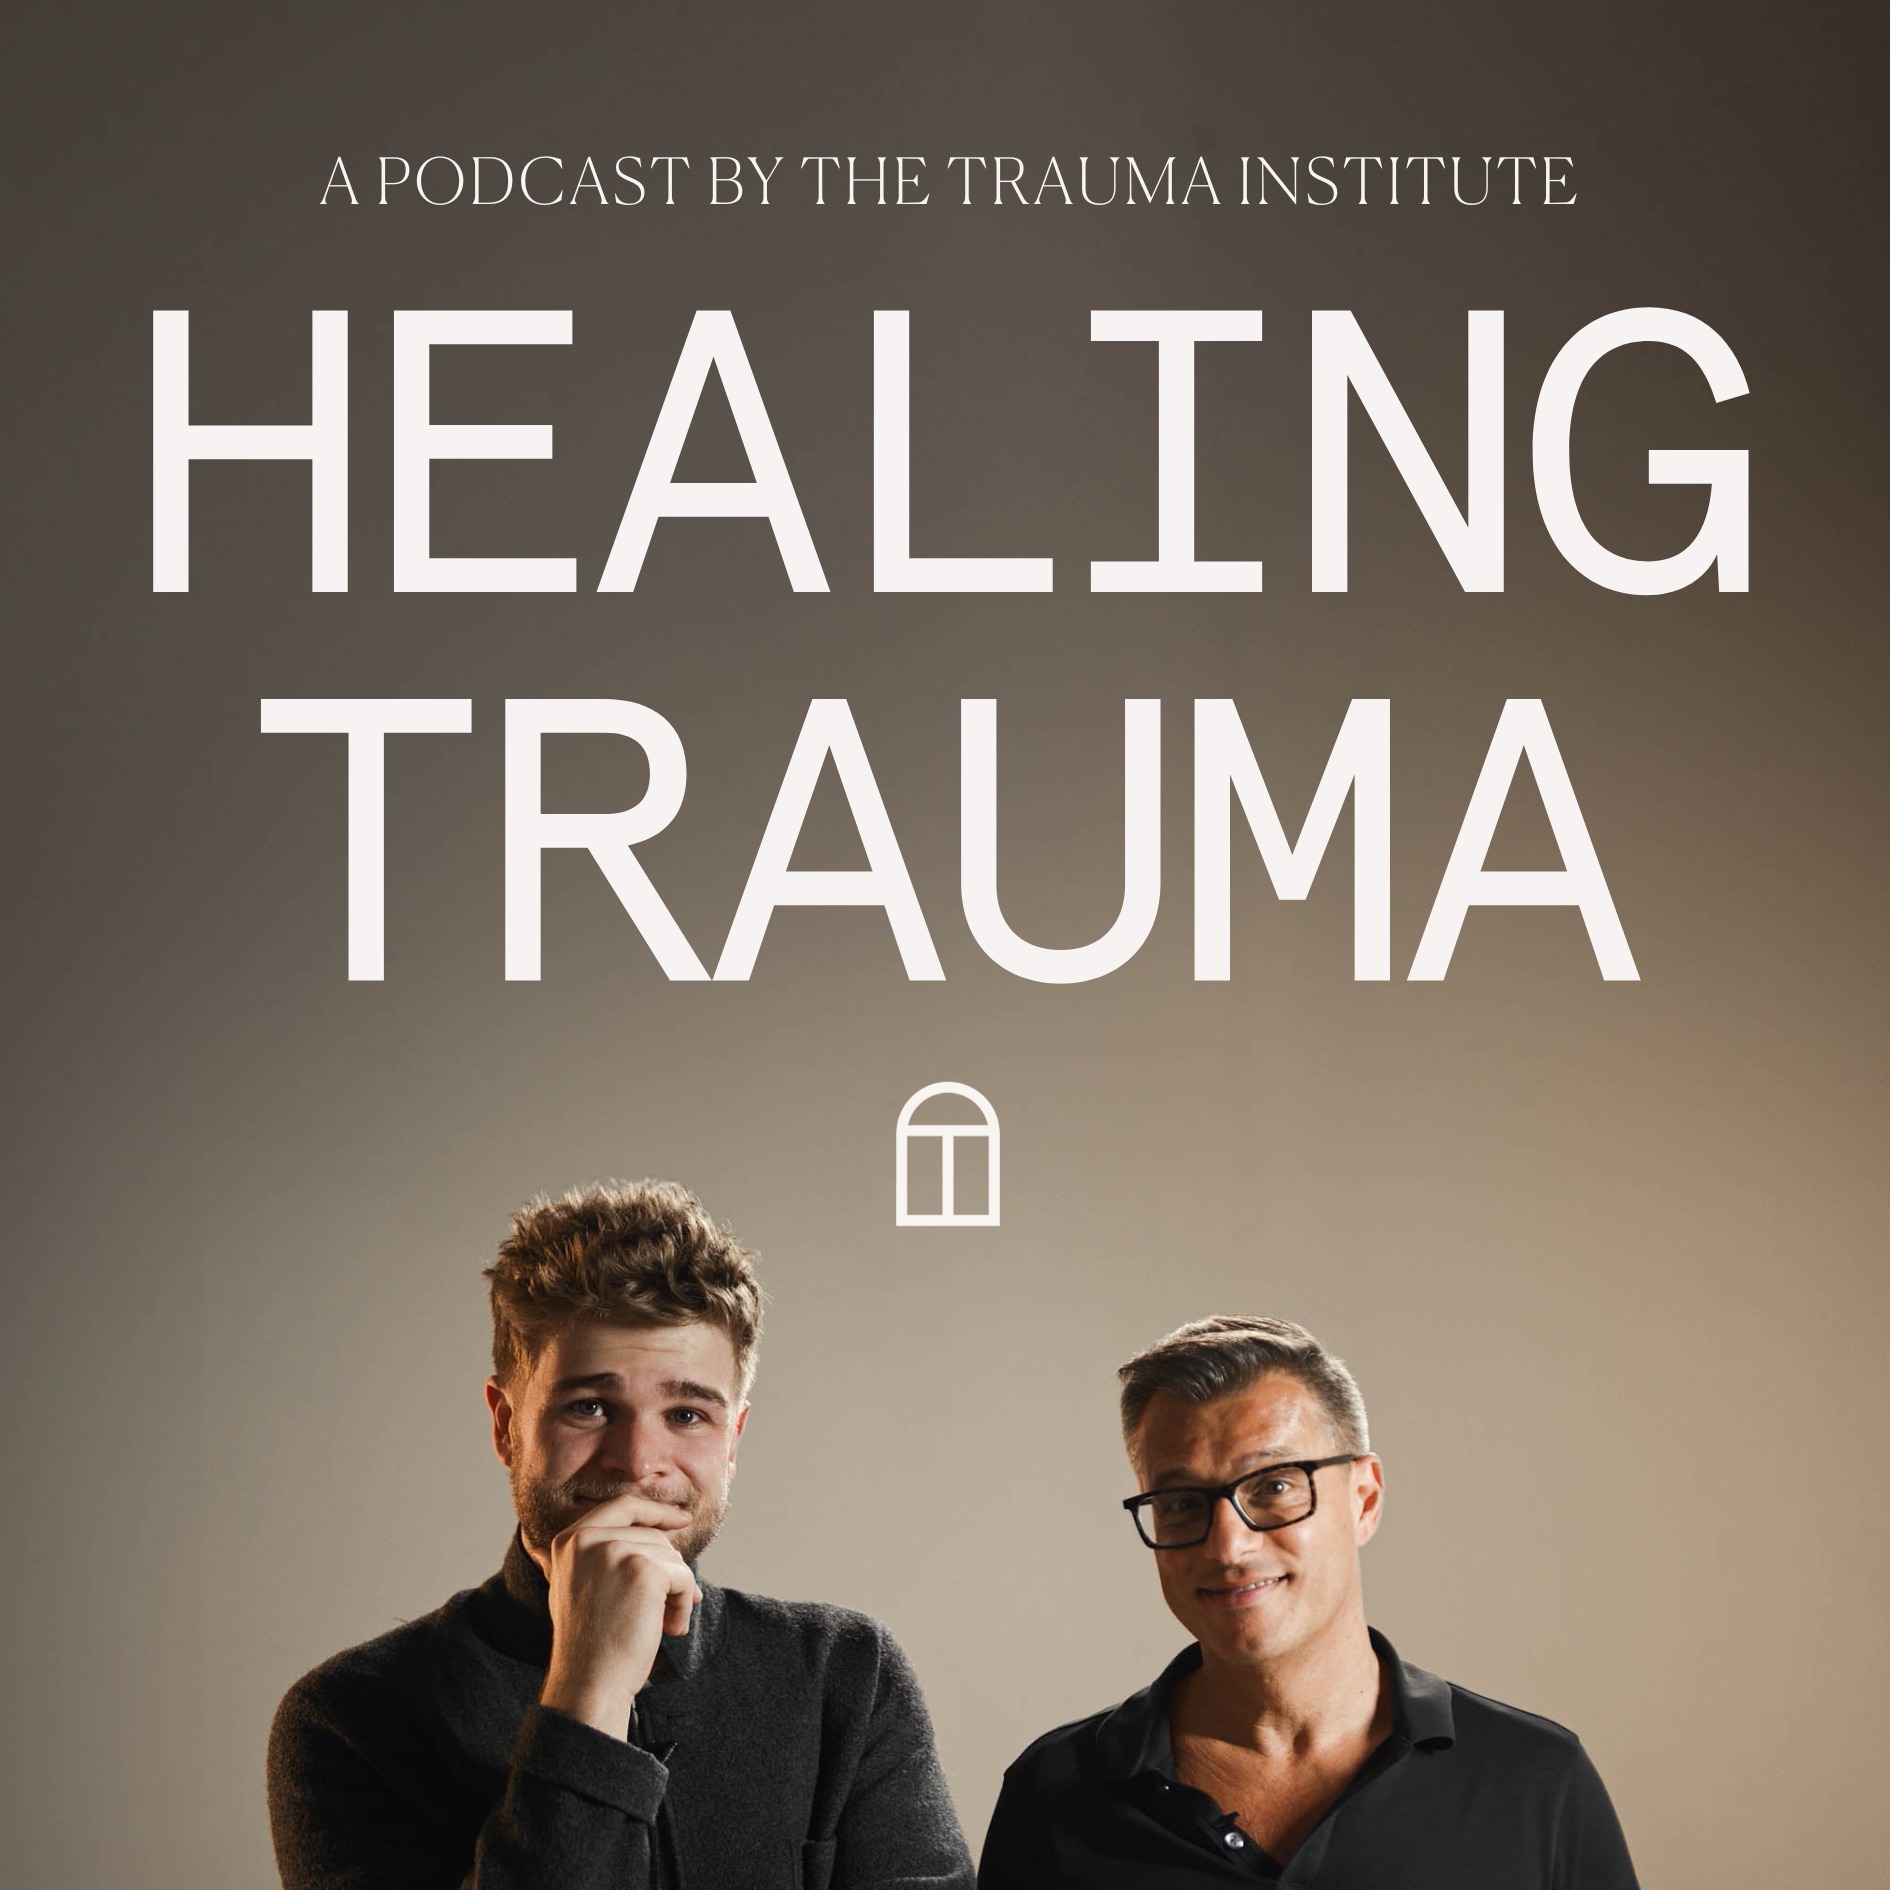 Healing Generational Trauma